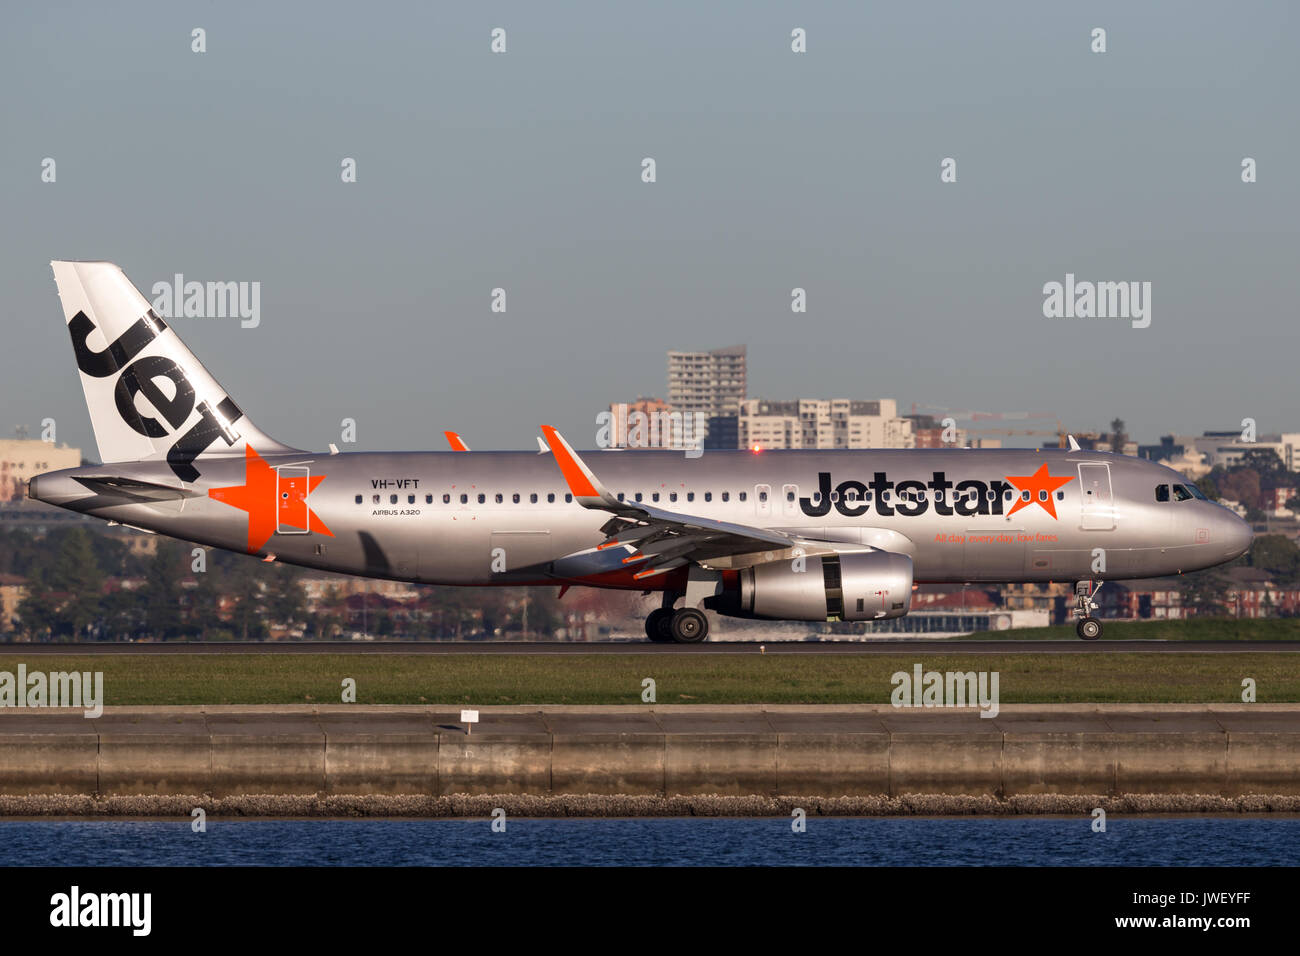 Jetstar Airways Airbus A320 airliner landing at Sydney Airport. Stock Photo